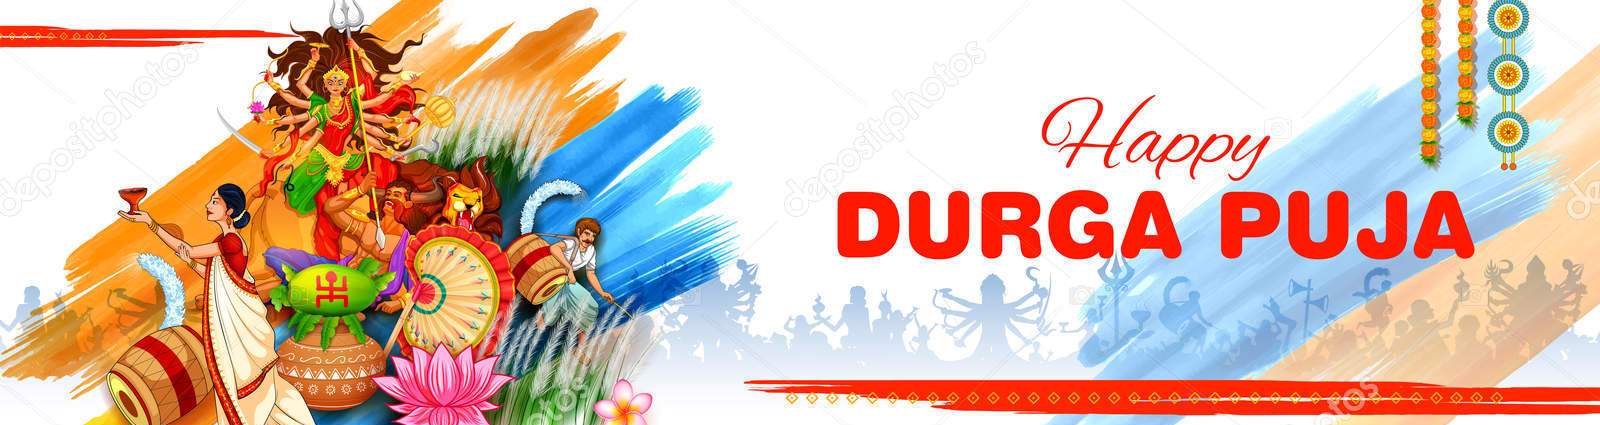 Happy Durga Puja Subh Navratri Indian